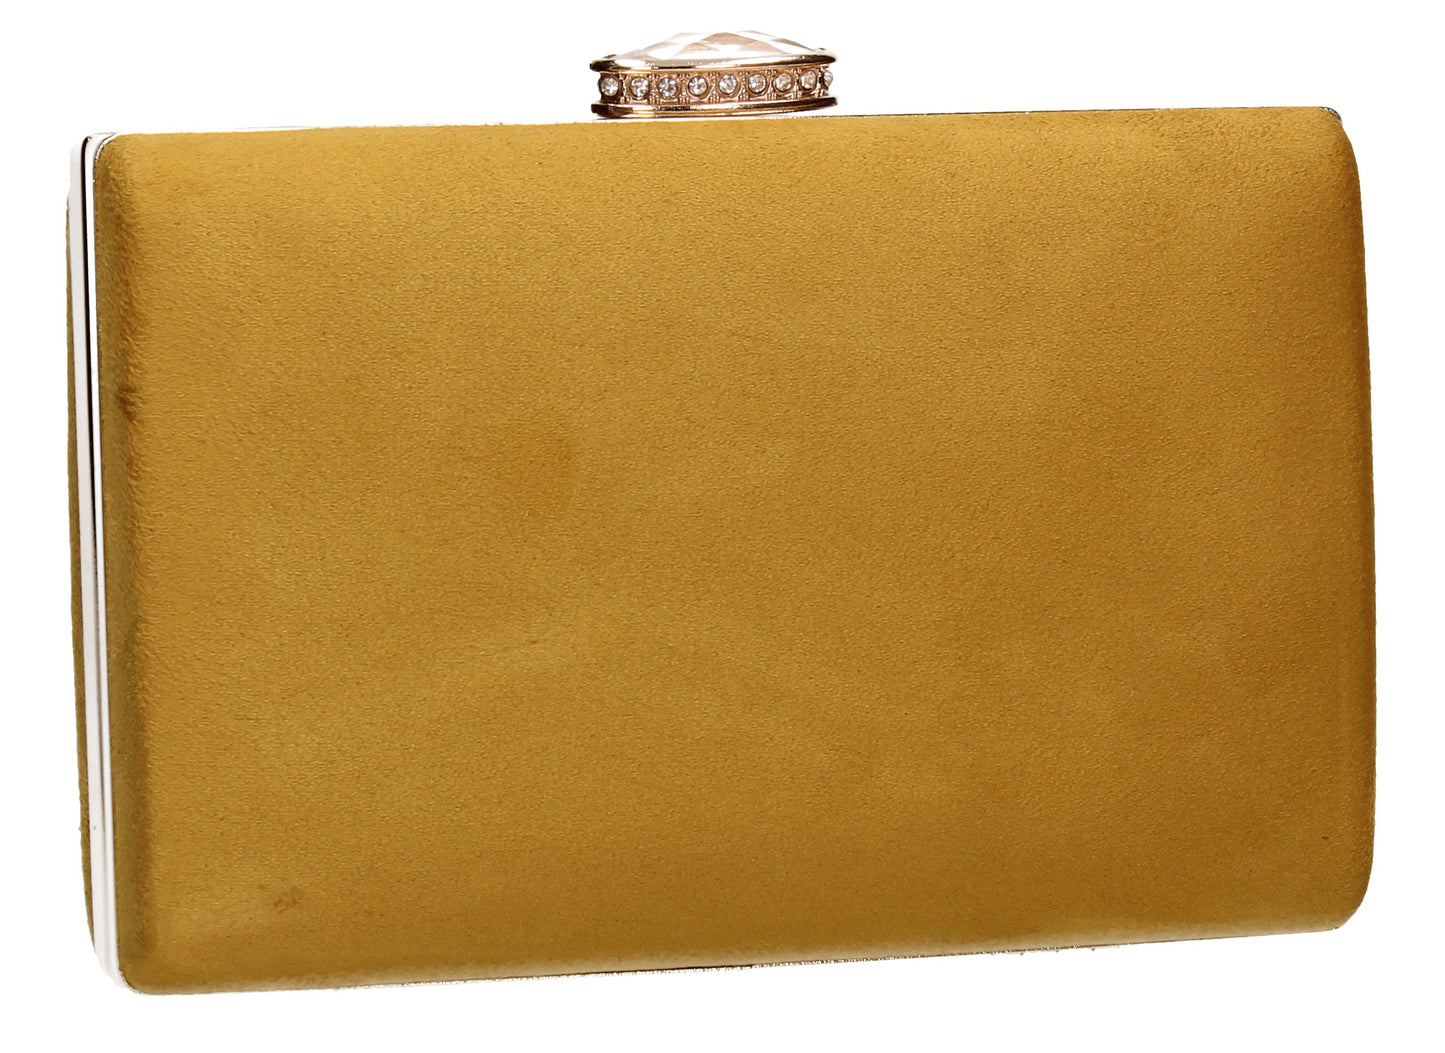 SWANKYSWANS Surrey Clutch Bag Yellow Cute Cheap Clutch Bag For Weddings School and Work